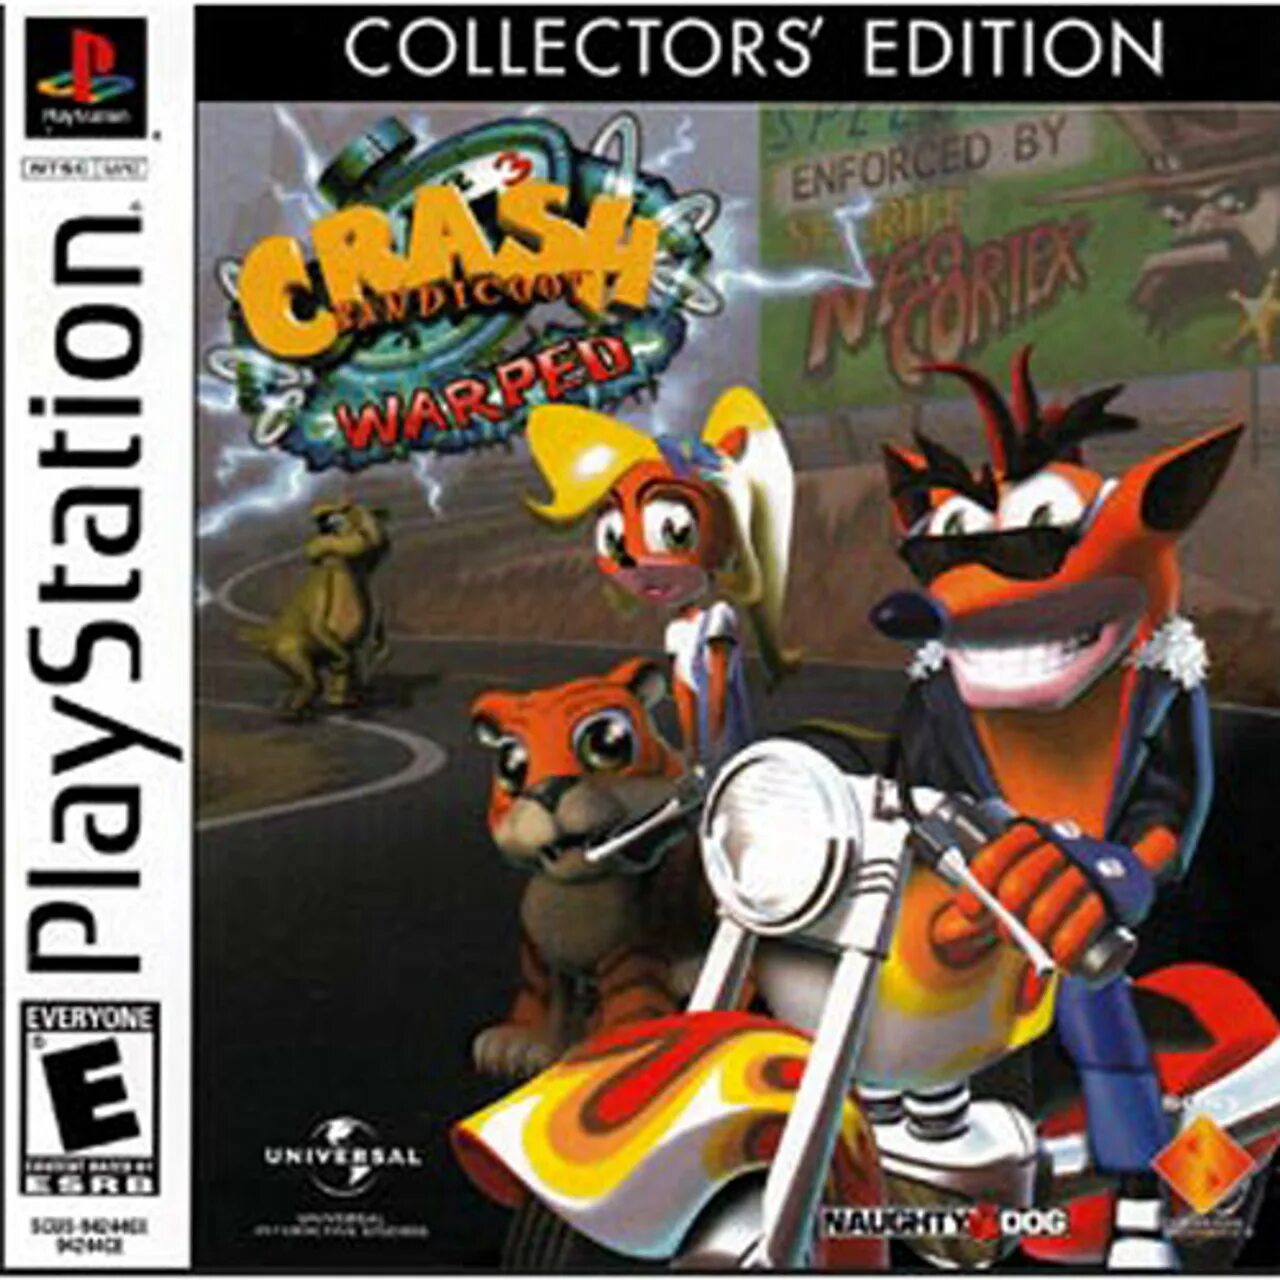 Crash Bandicoot 3. Crash Bandicoot Sony PLAYSTATION 1. Crash Bandicoot 3 Warped. Crash Bandicoot 3 Warped ps1 обложка.